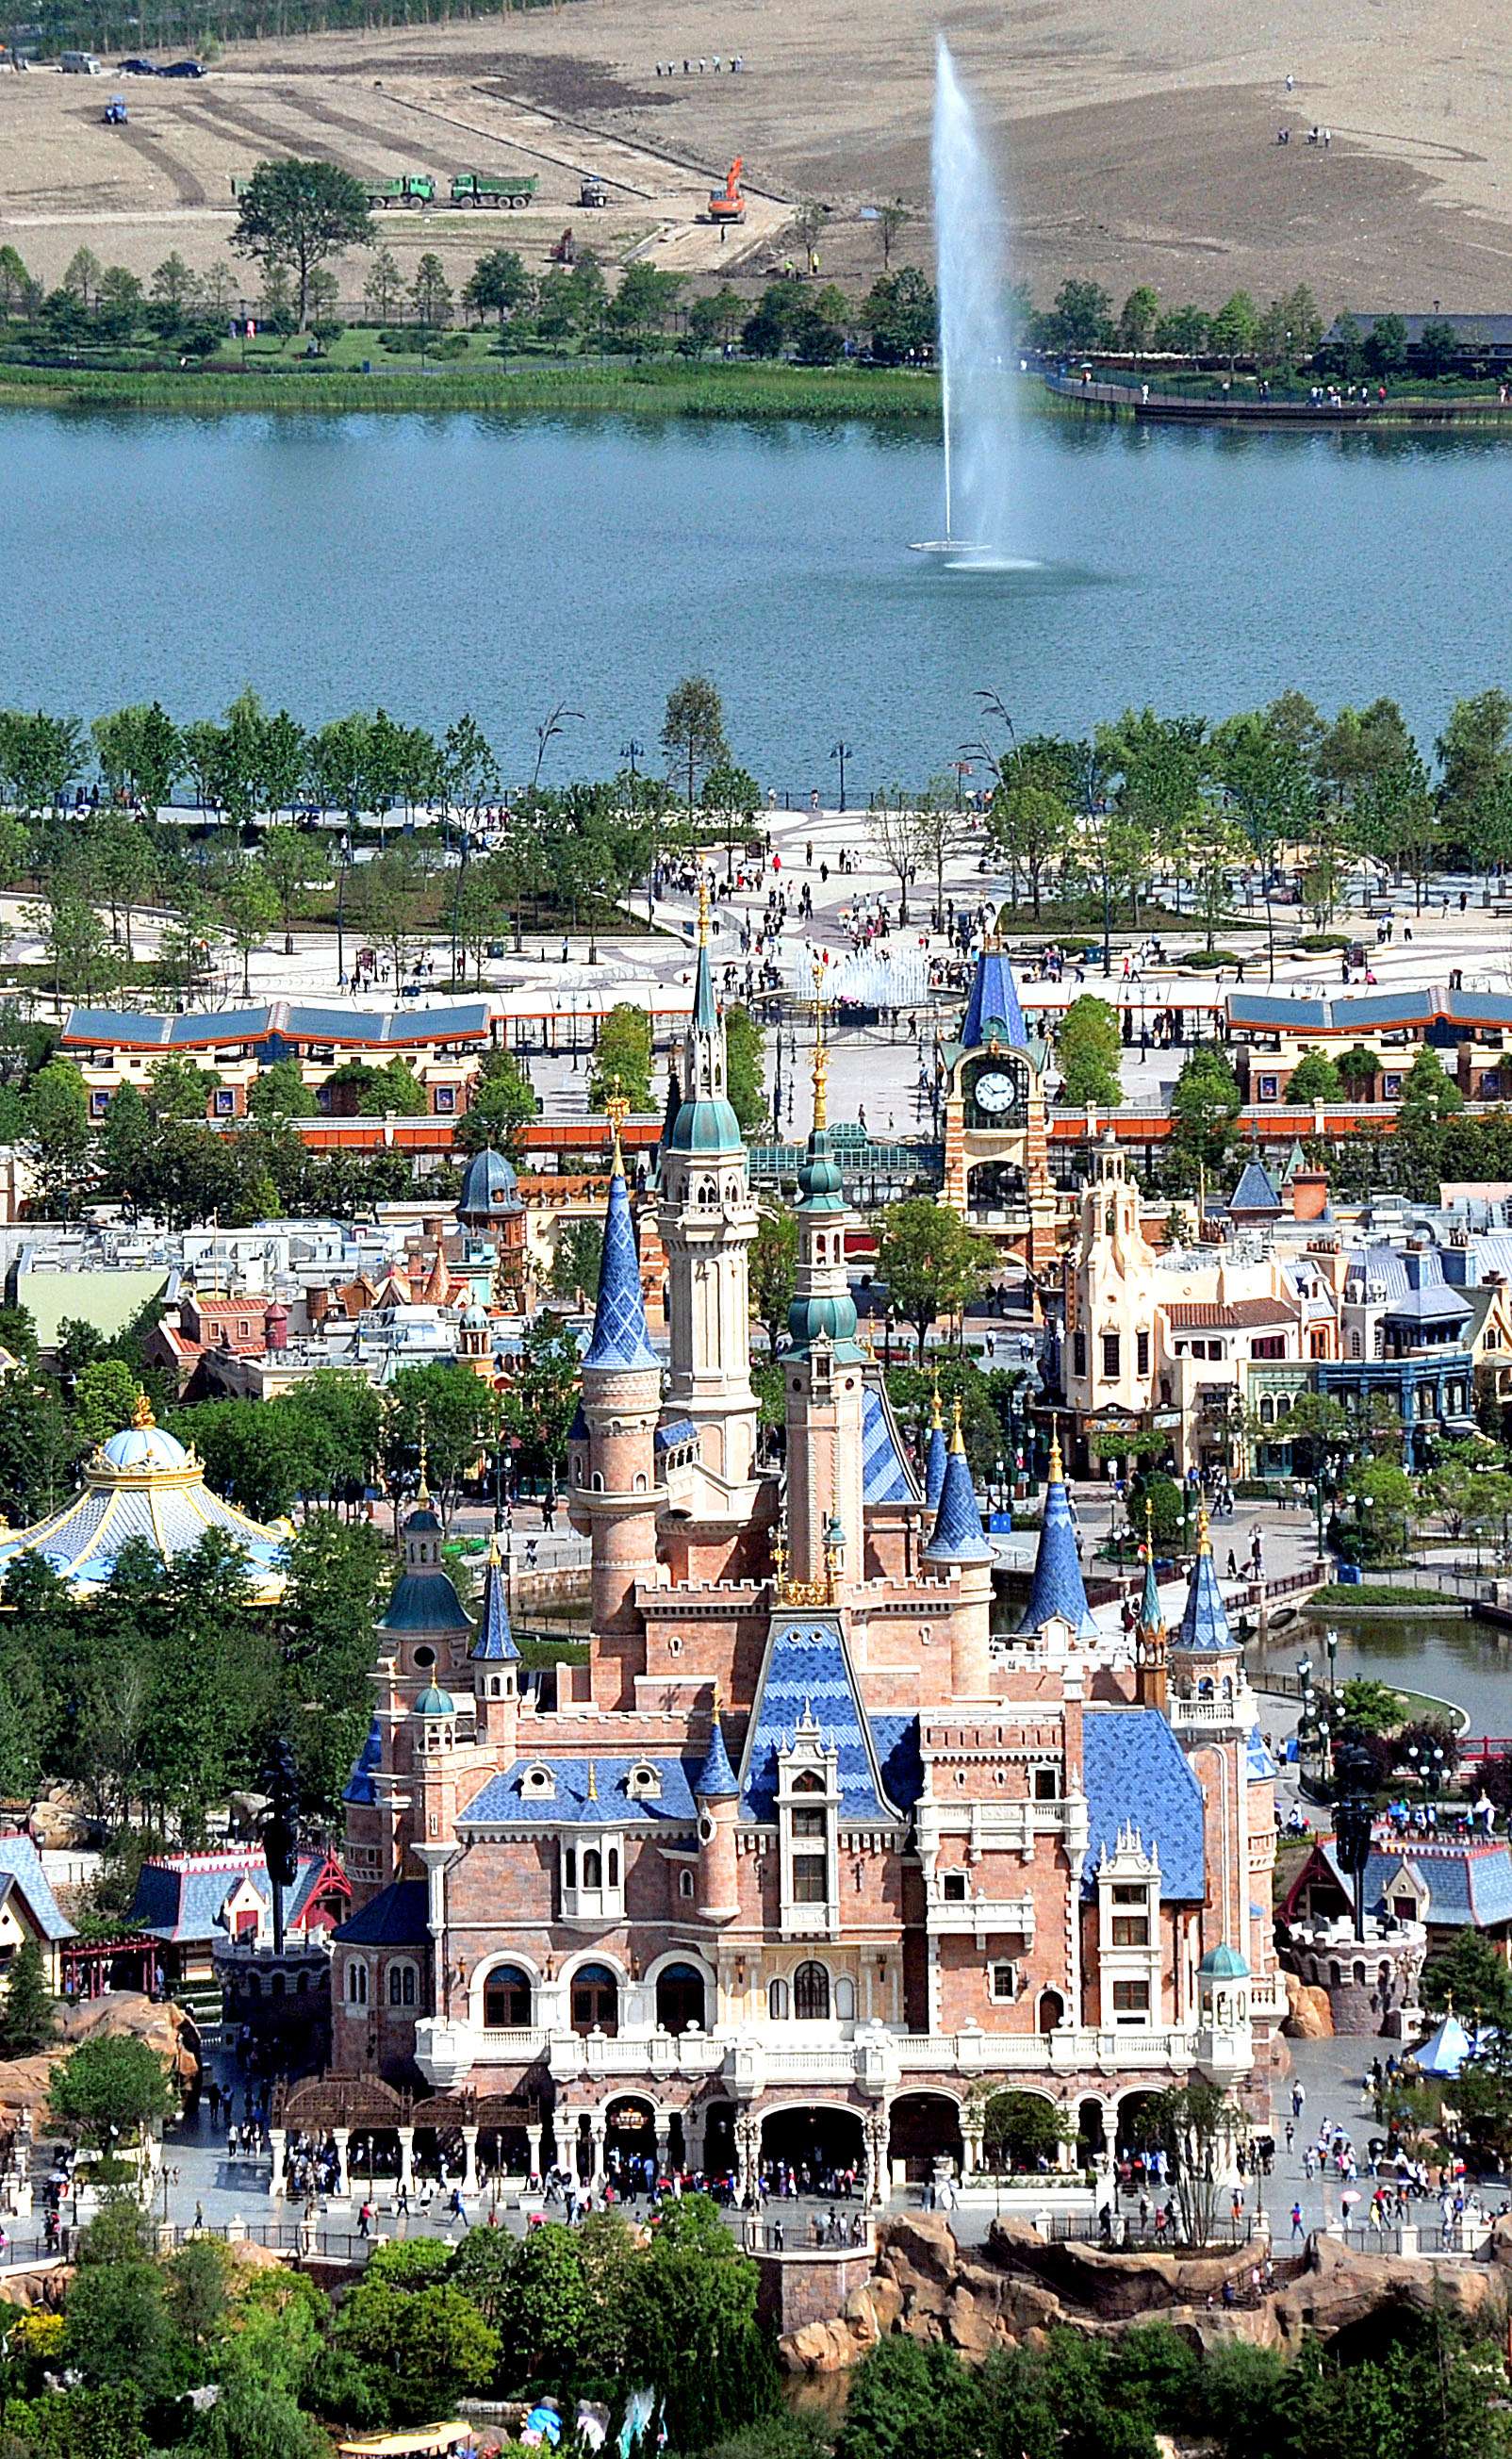 The Fantasy Fairy Tale Castle of Shanghai Disneyland Photo: Xinhua